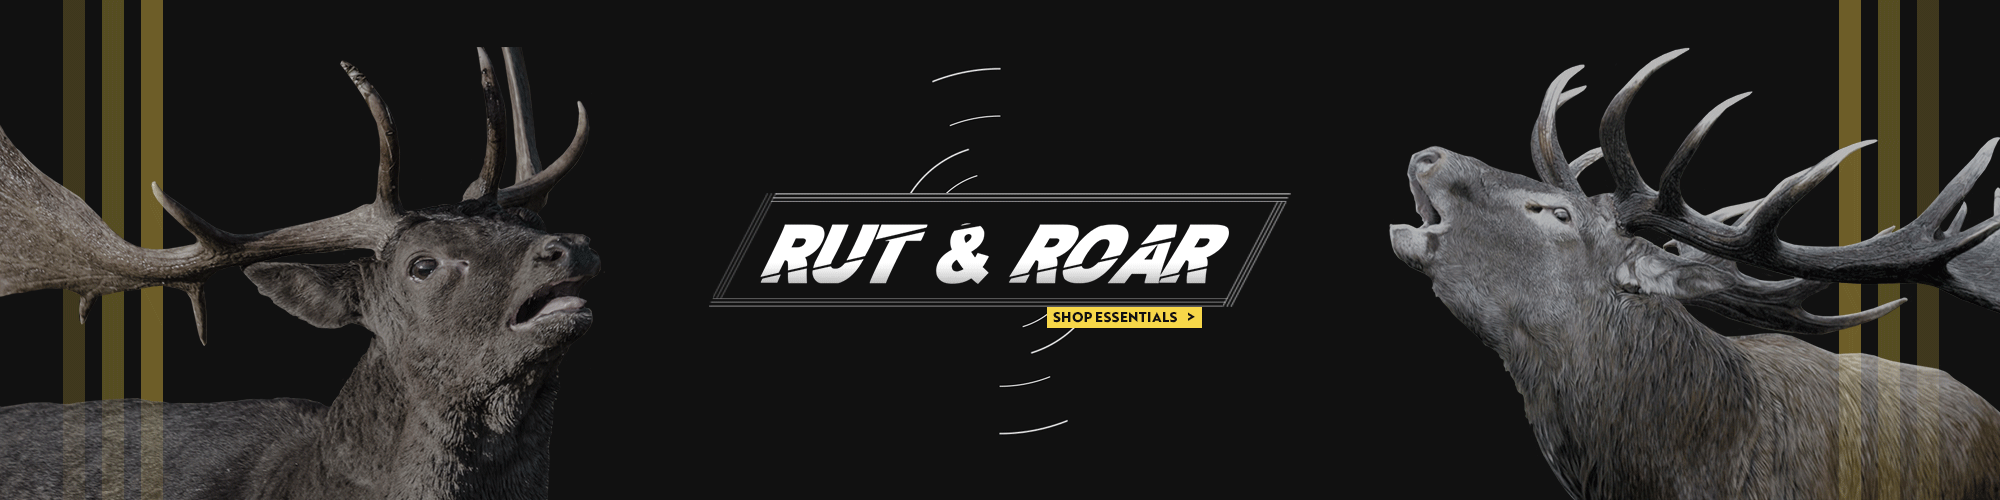 Rut & Roar Desktop Banner